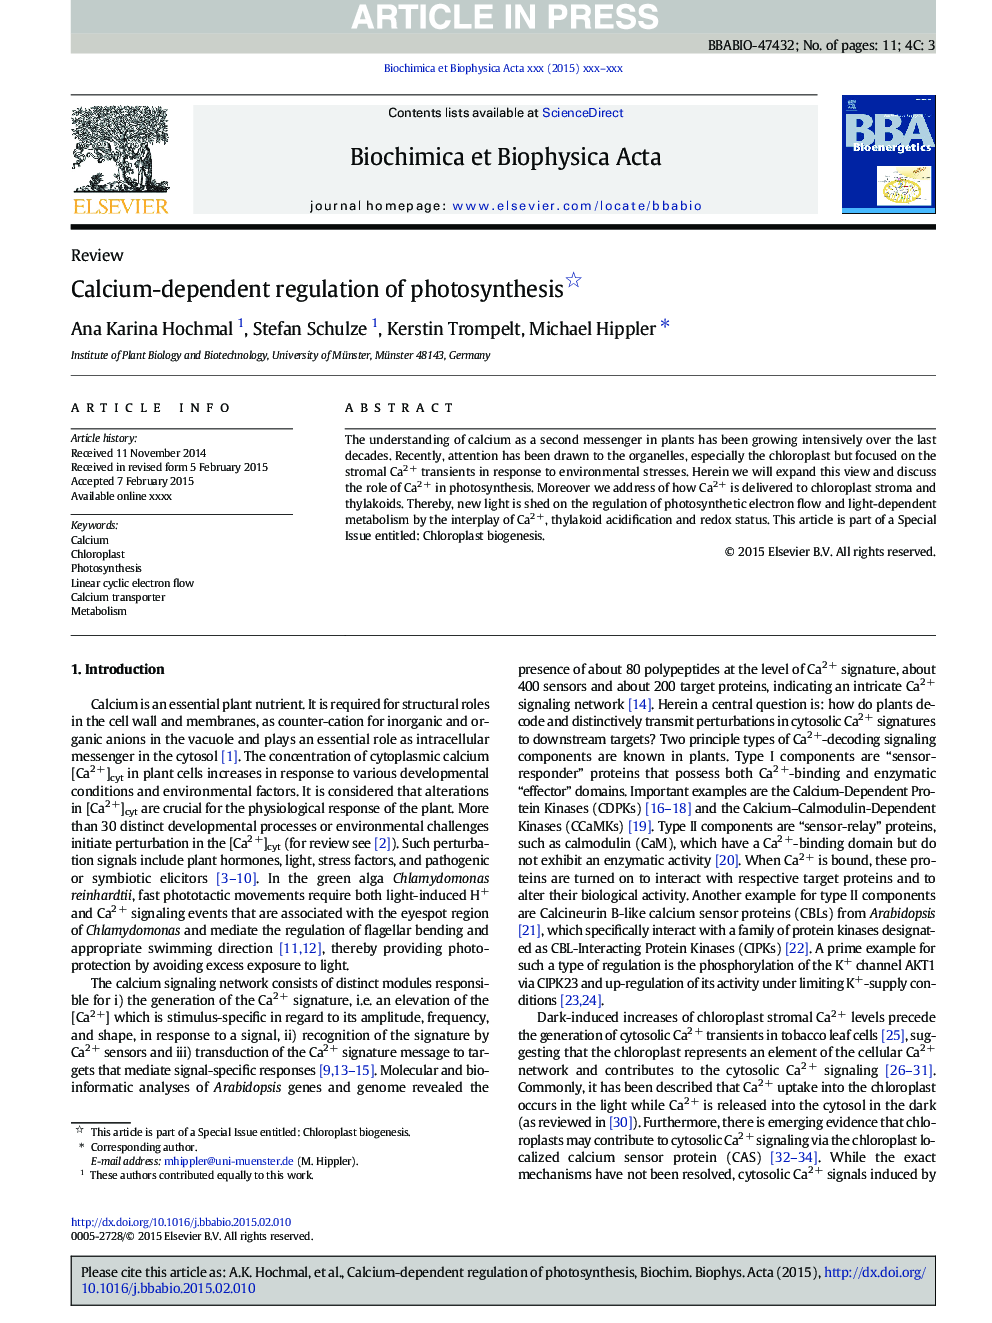 Calcium-dependent regulation of photosynthesis